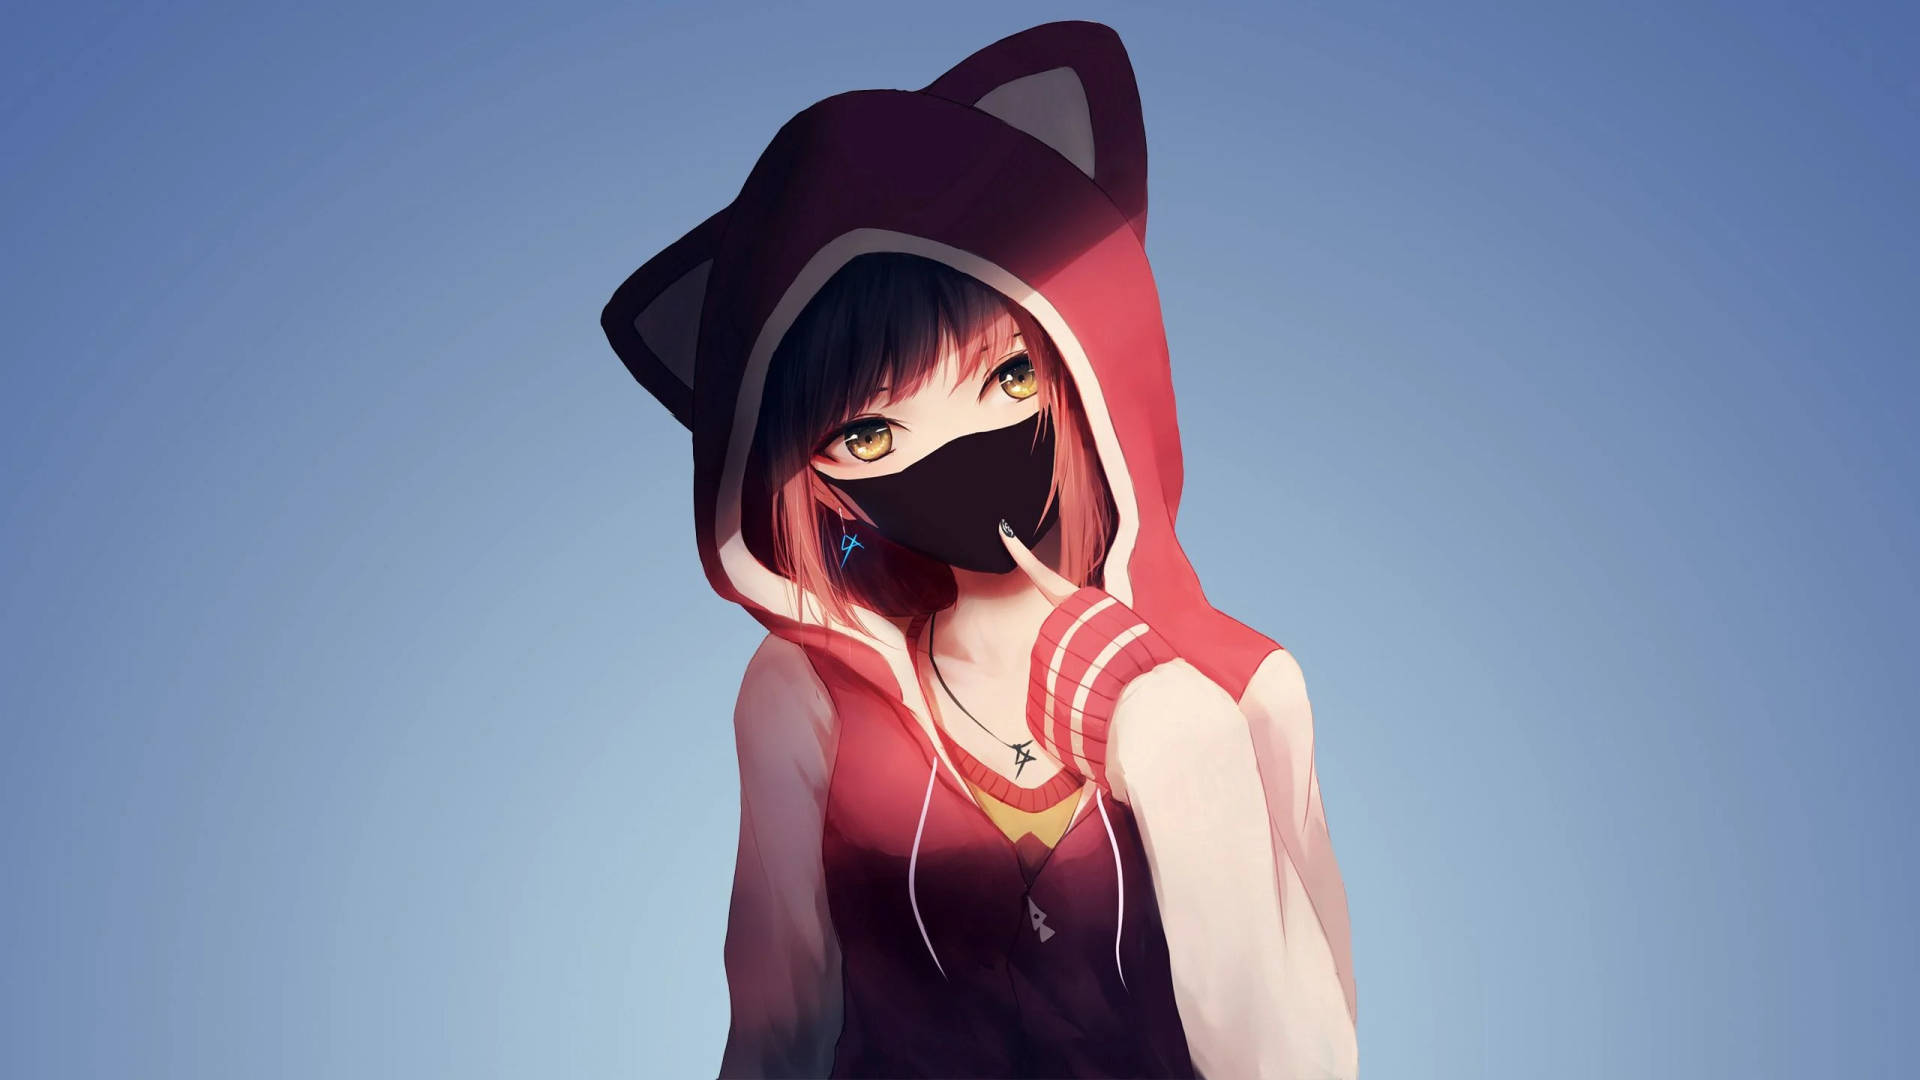 Anime Girl Hoodie With Black Mask